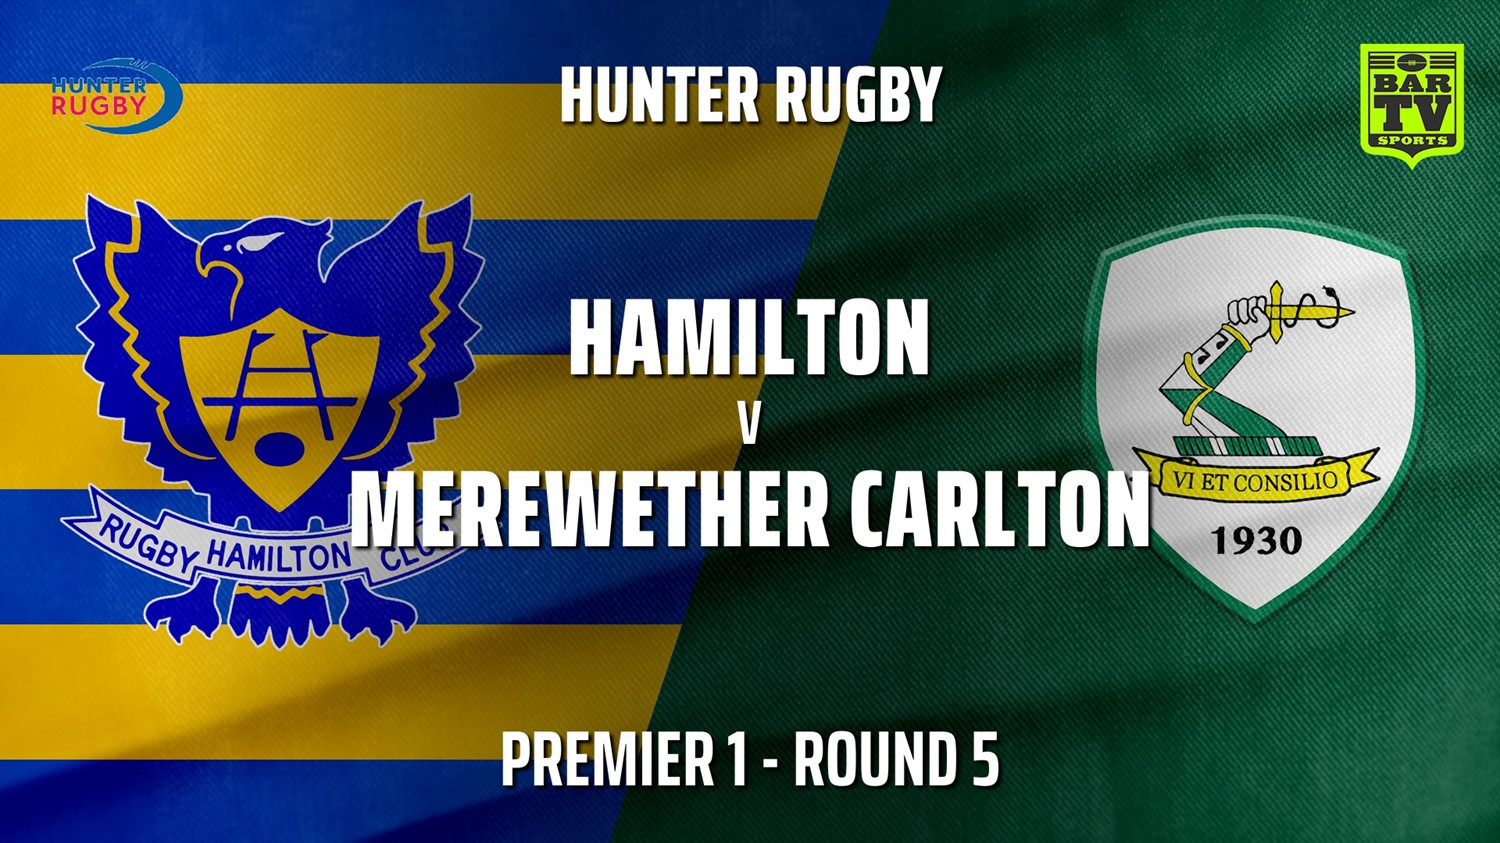 210515-HRU Round 5 - Premier 1 - Hamilton Hawks v Merewether Carlton Minigame Slate Image